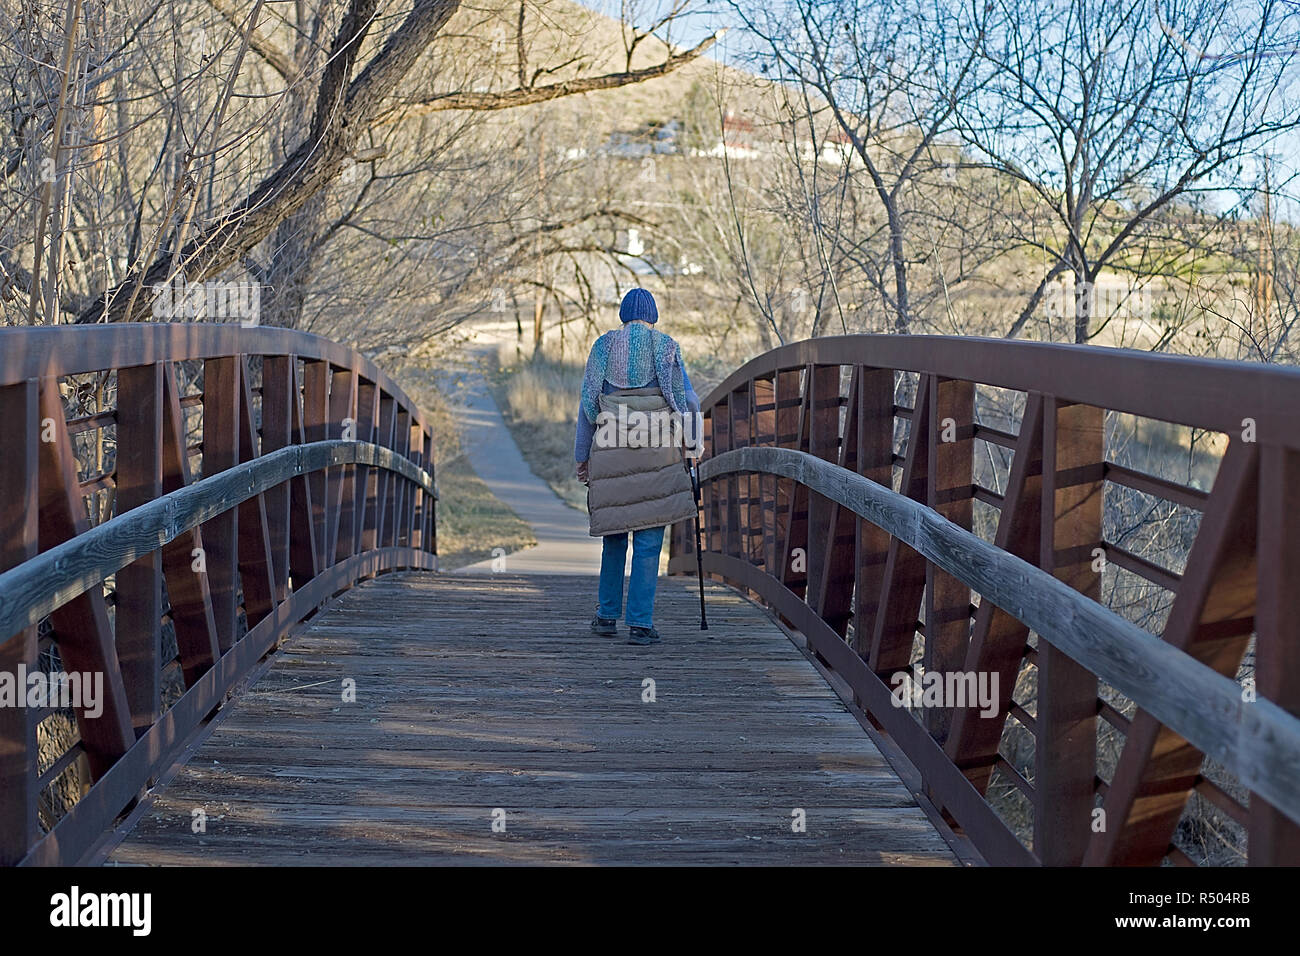 Senior citizen woman walking over a pedestrian bridge in Alpine, Texas. Stock Photo